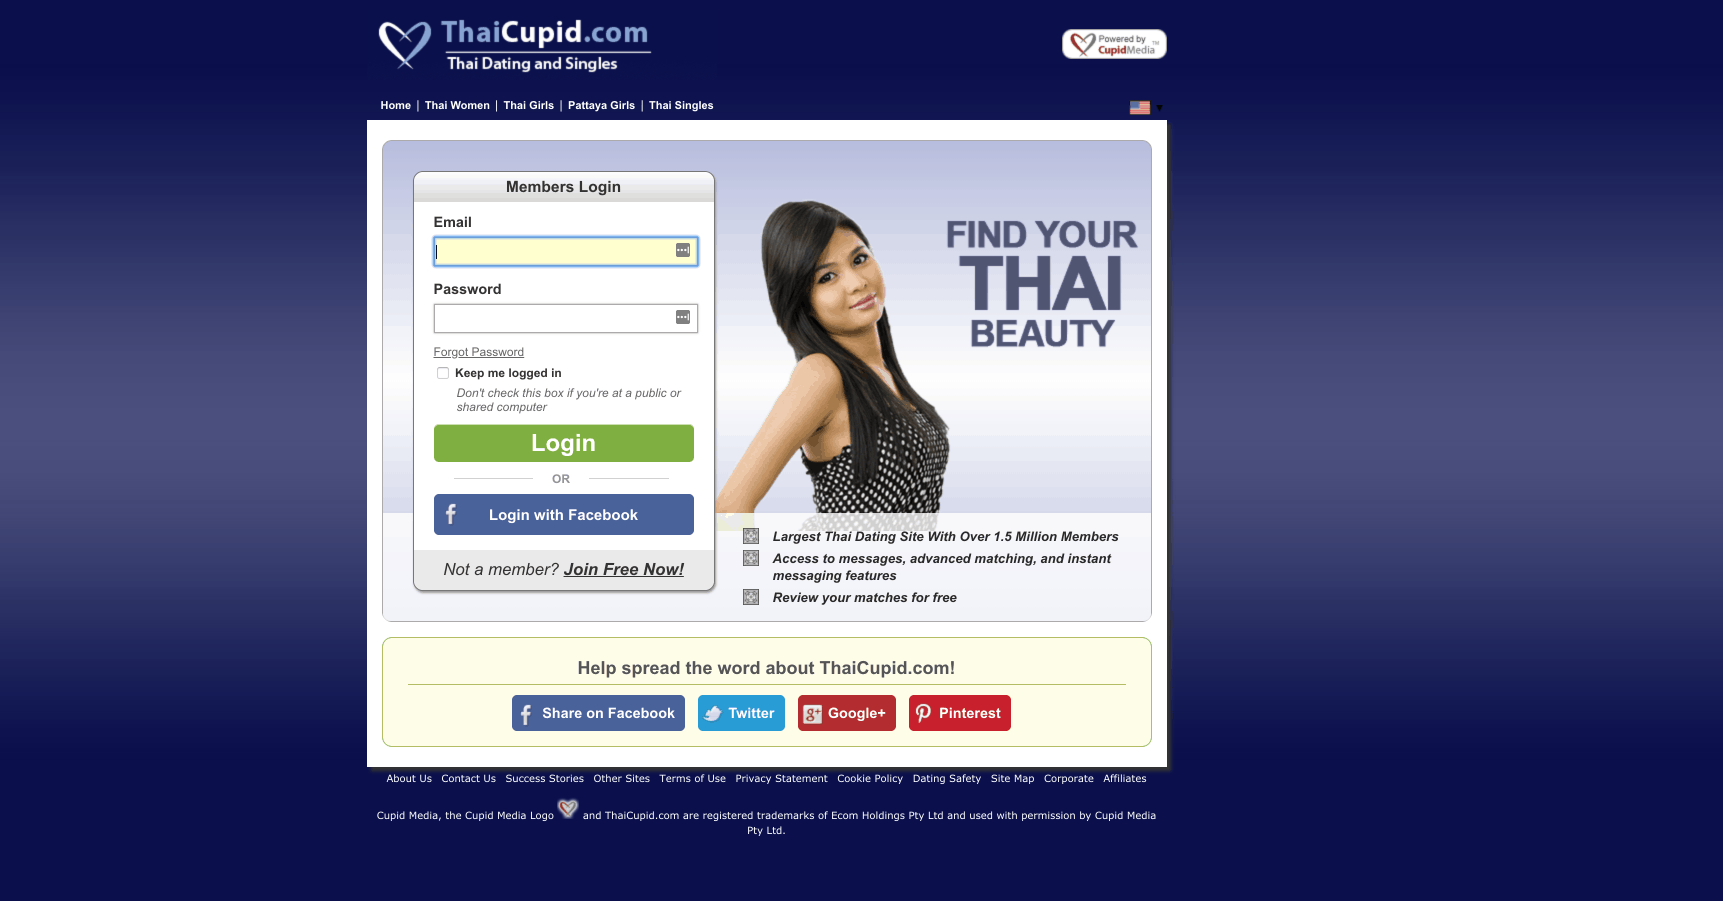 Thai teen chat free